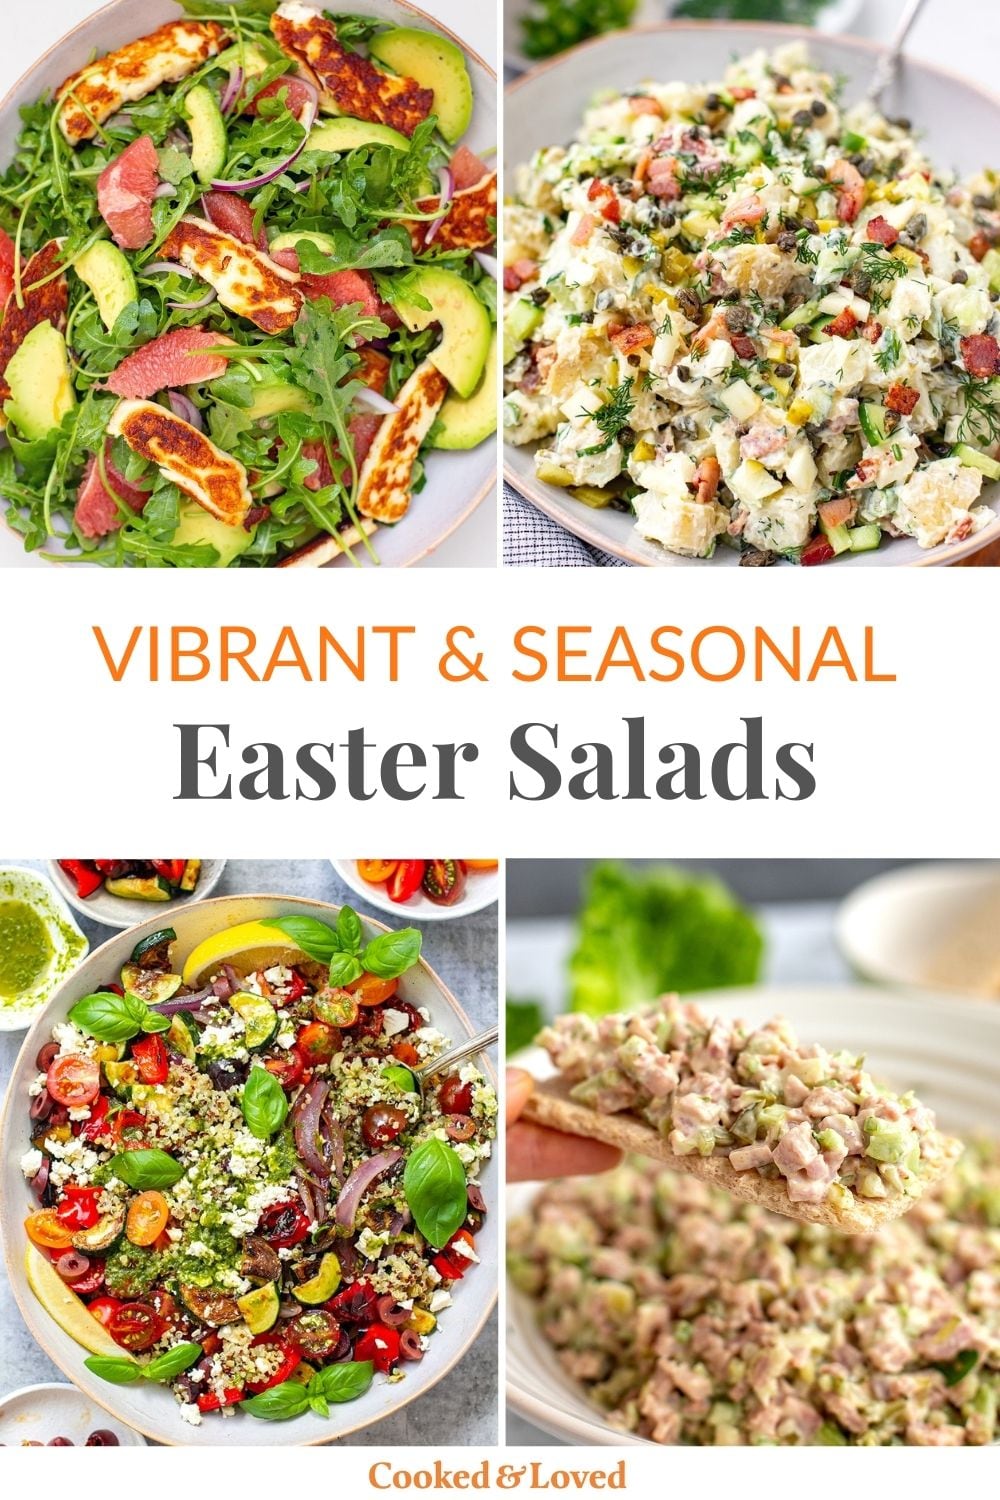 Best Easter Salad Recipes